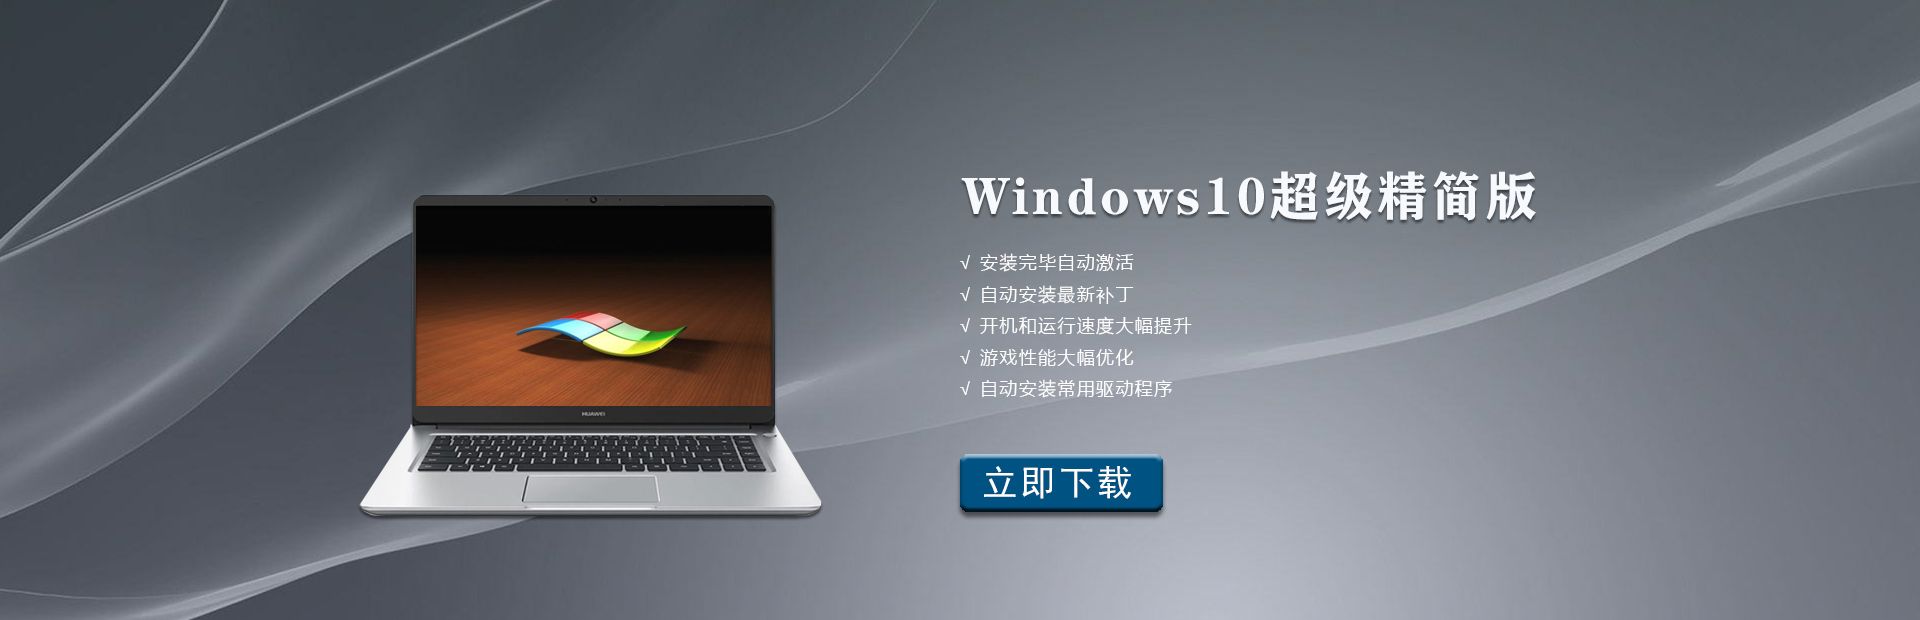 Windows10超级精简版